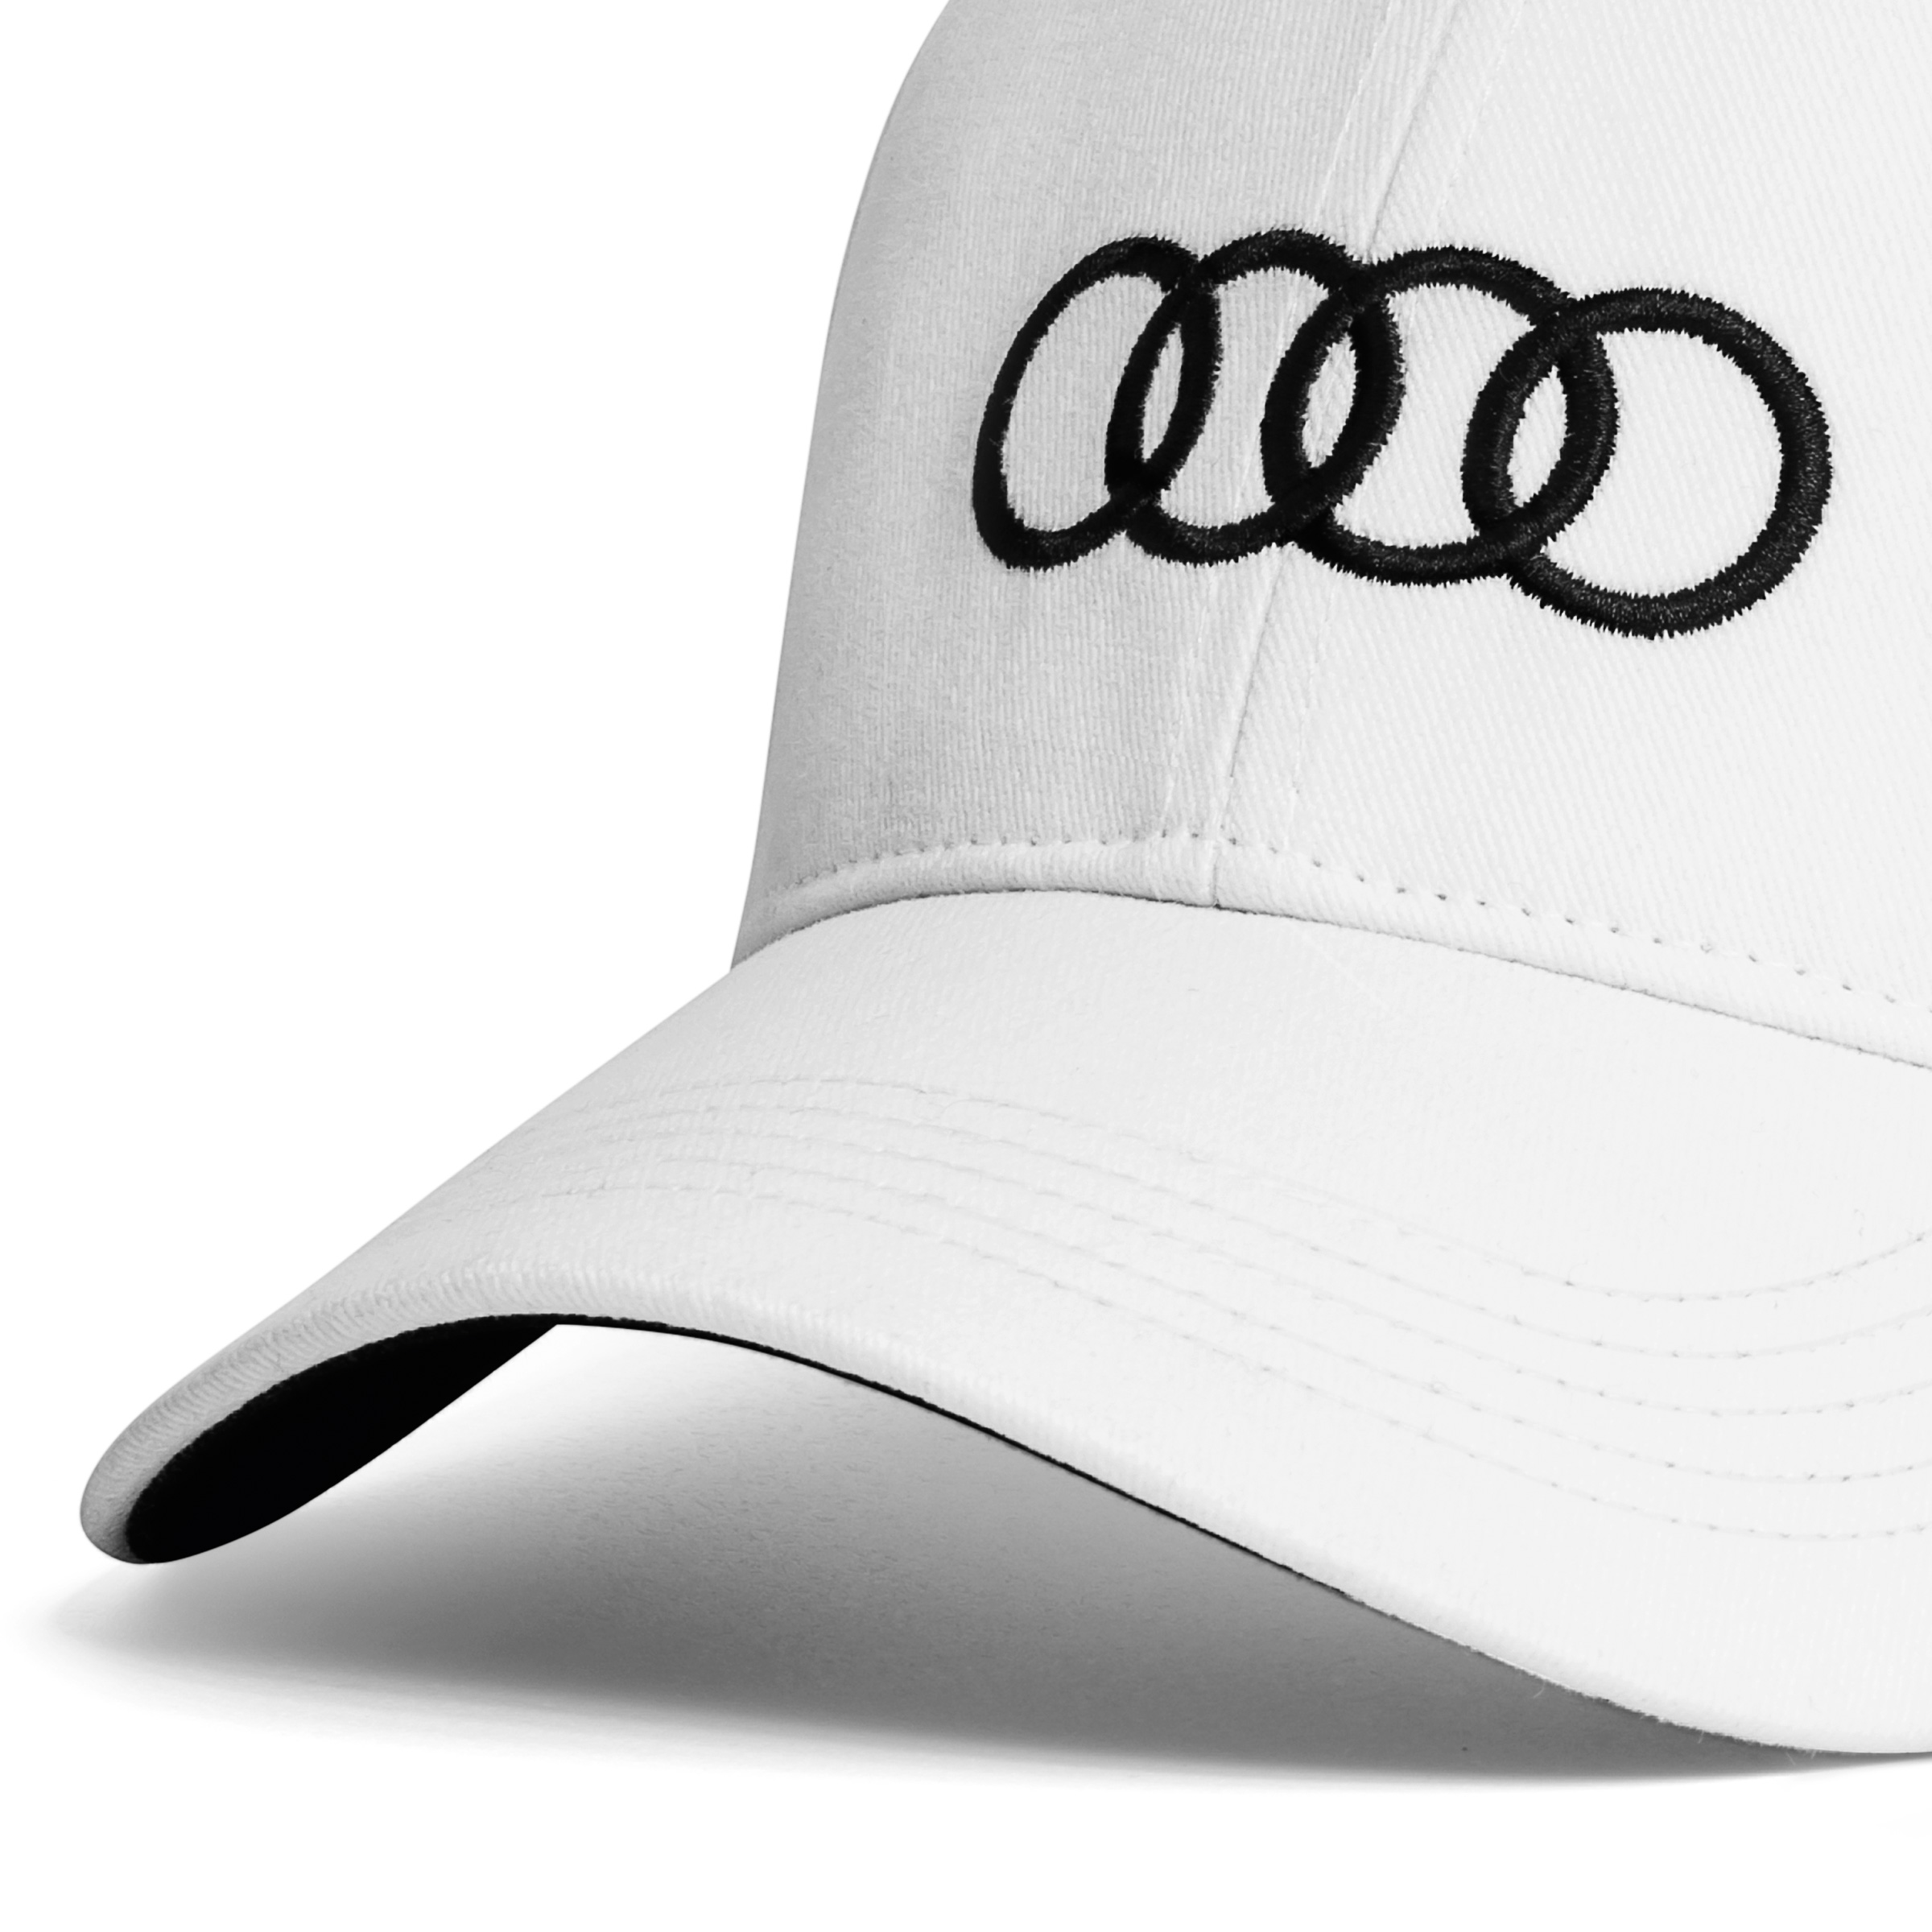 Audi Cap Kappe Basecap weiß 3131701020